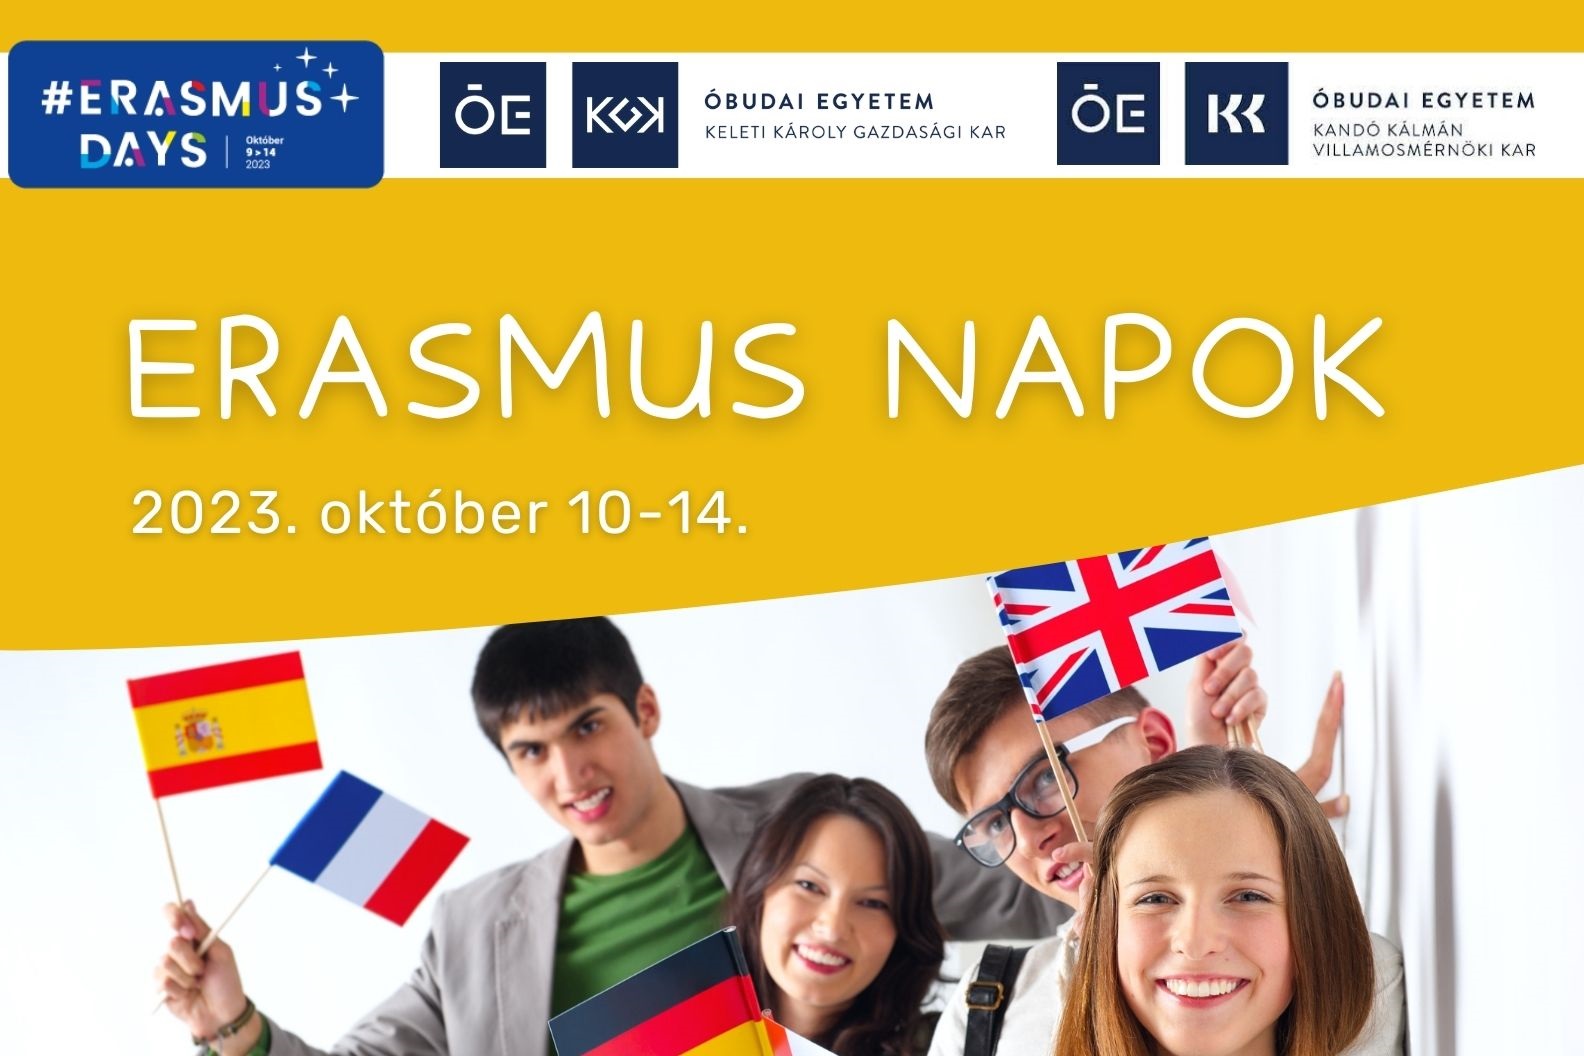 ERASMUS NAPOK! 2023. október 10-14.